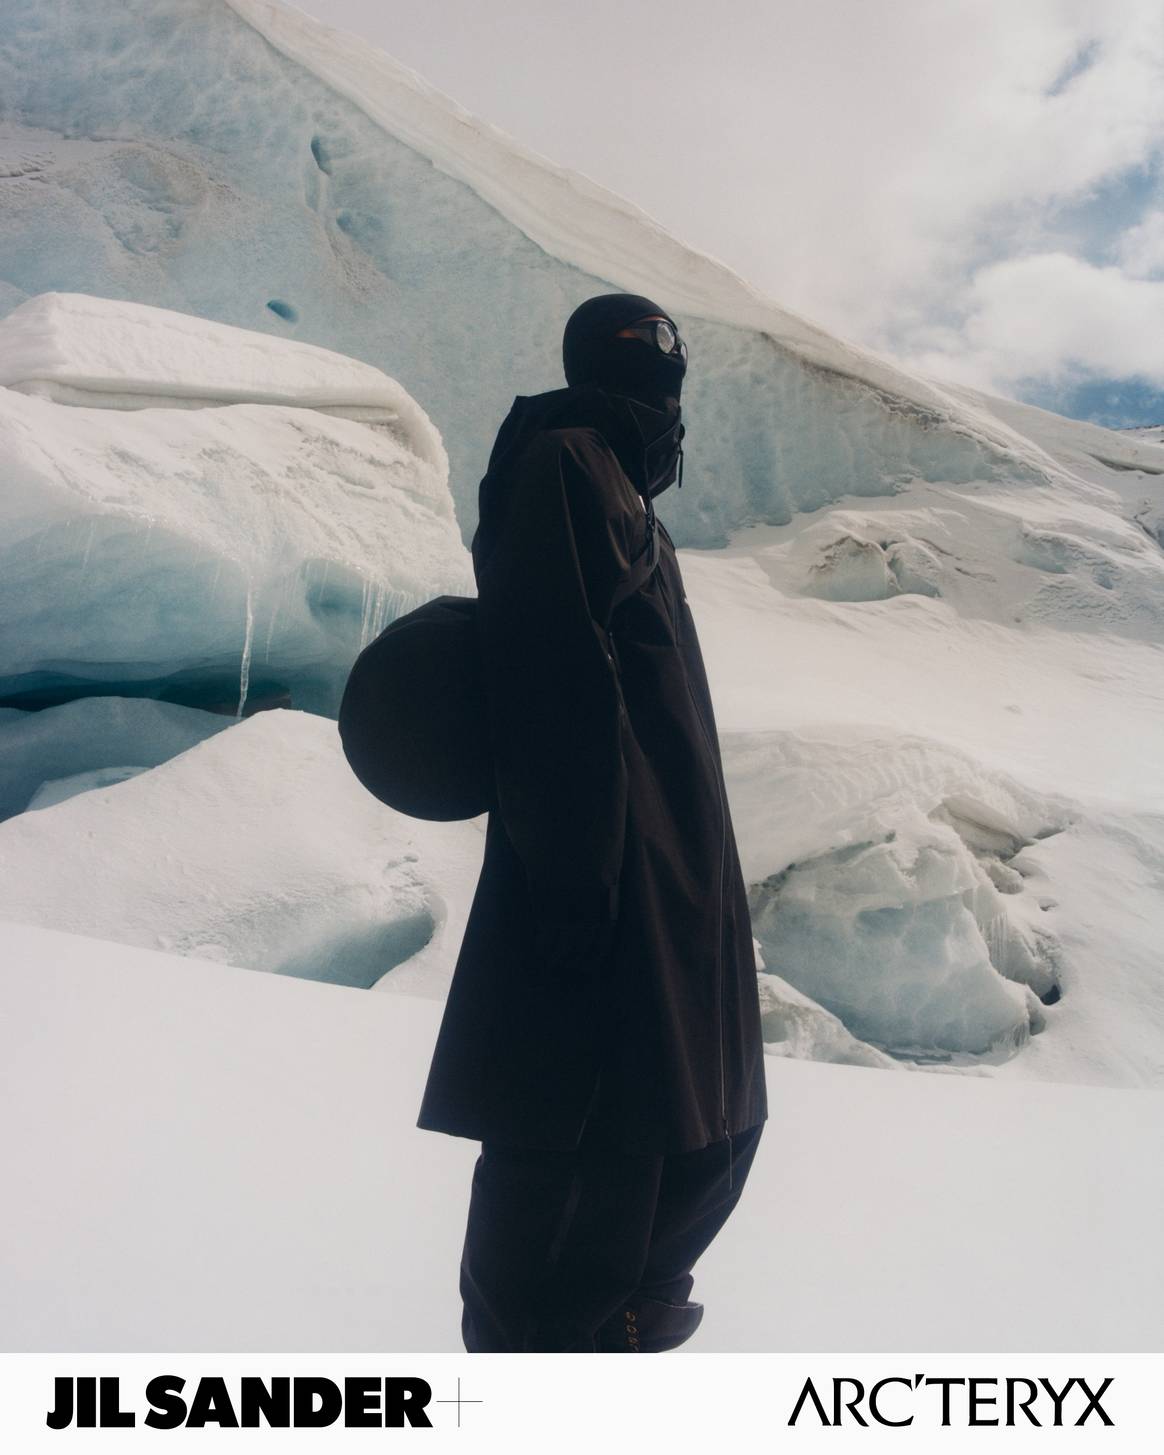 Jil Sander and Arc'teryx are reimagining mountainwear